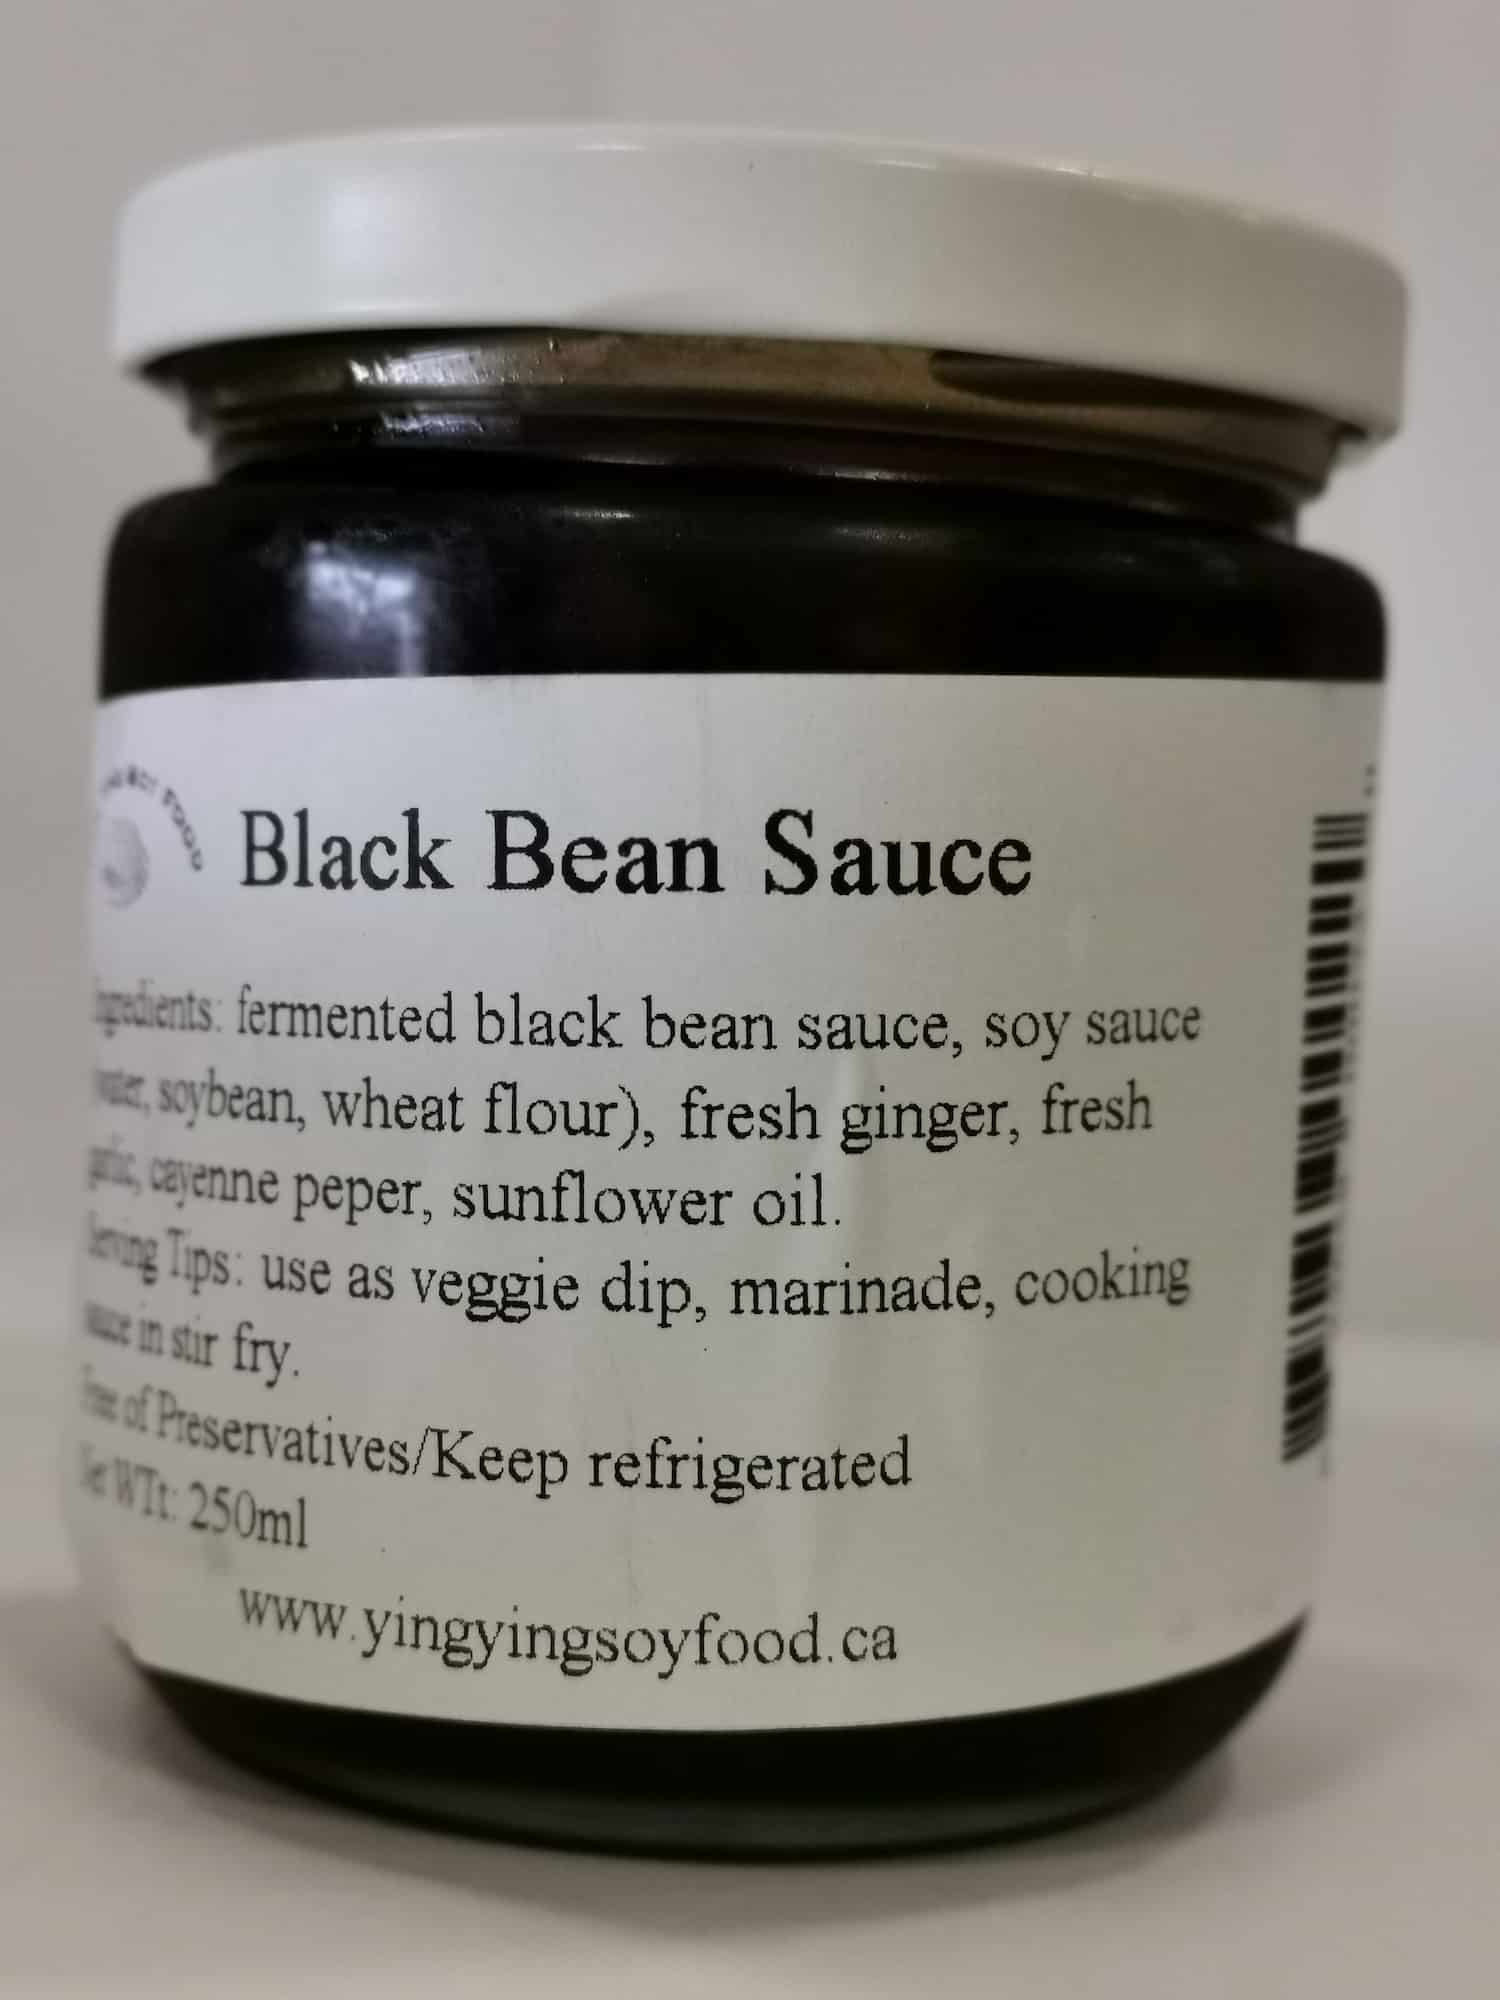 Black bean sauce